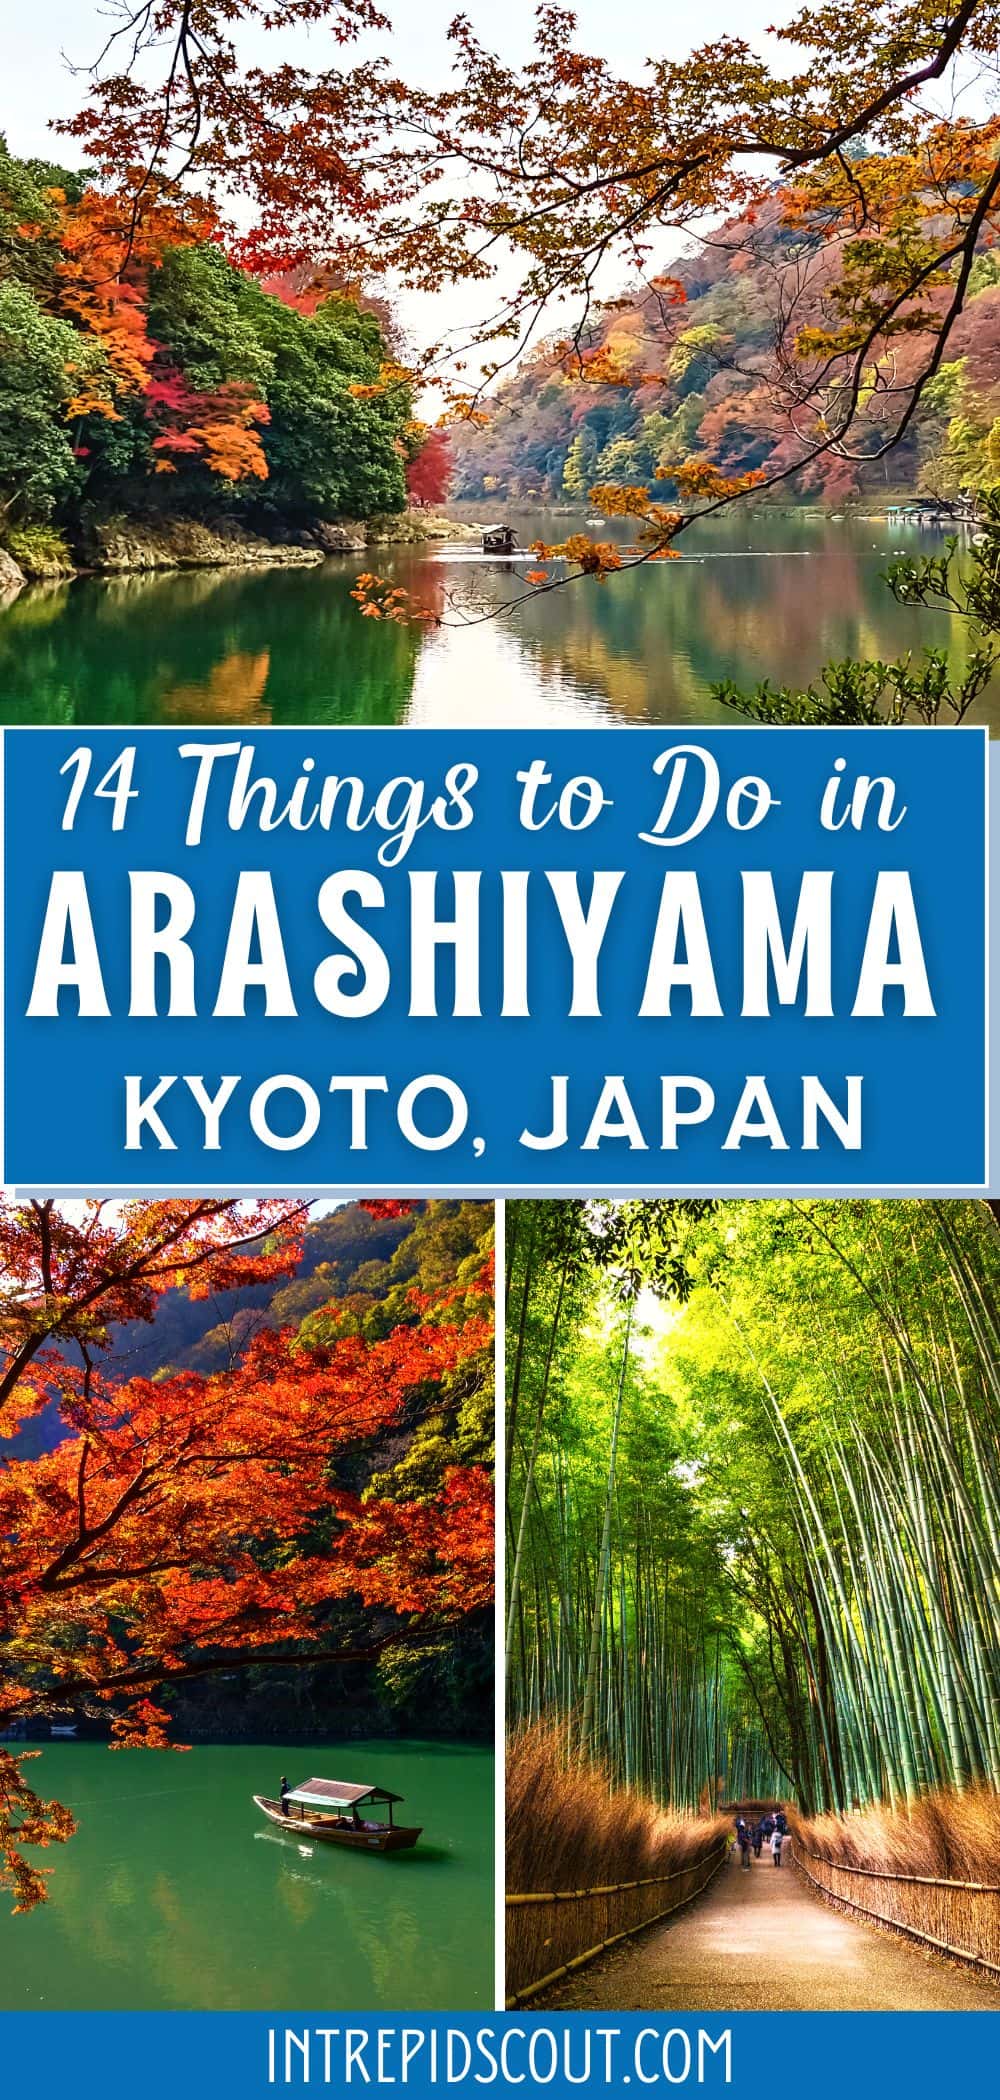 Things to Do in Arashiyama, Kyoto